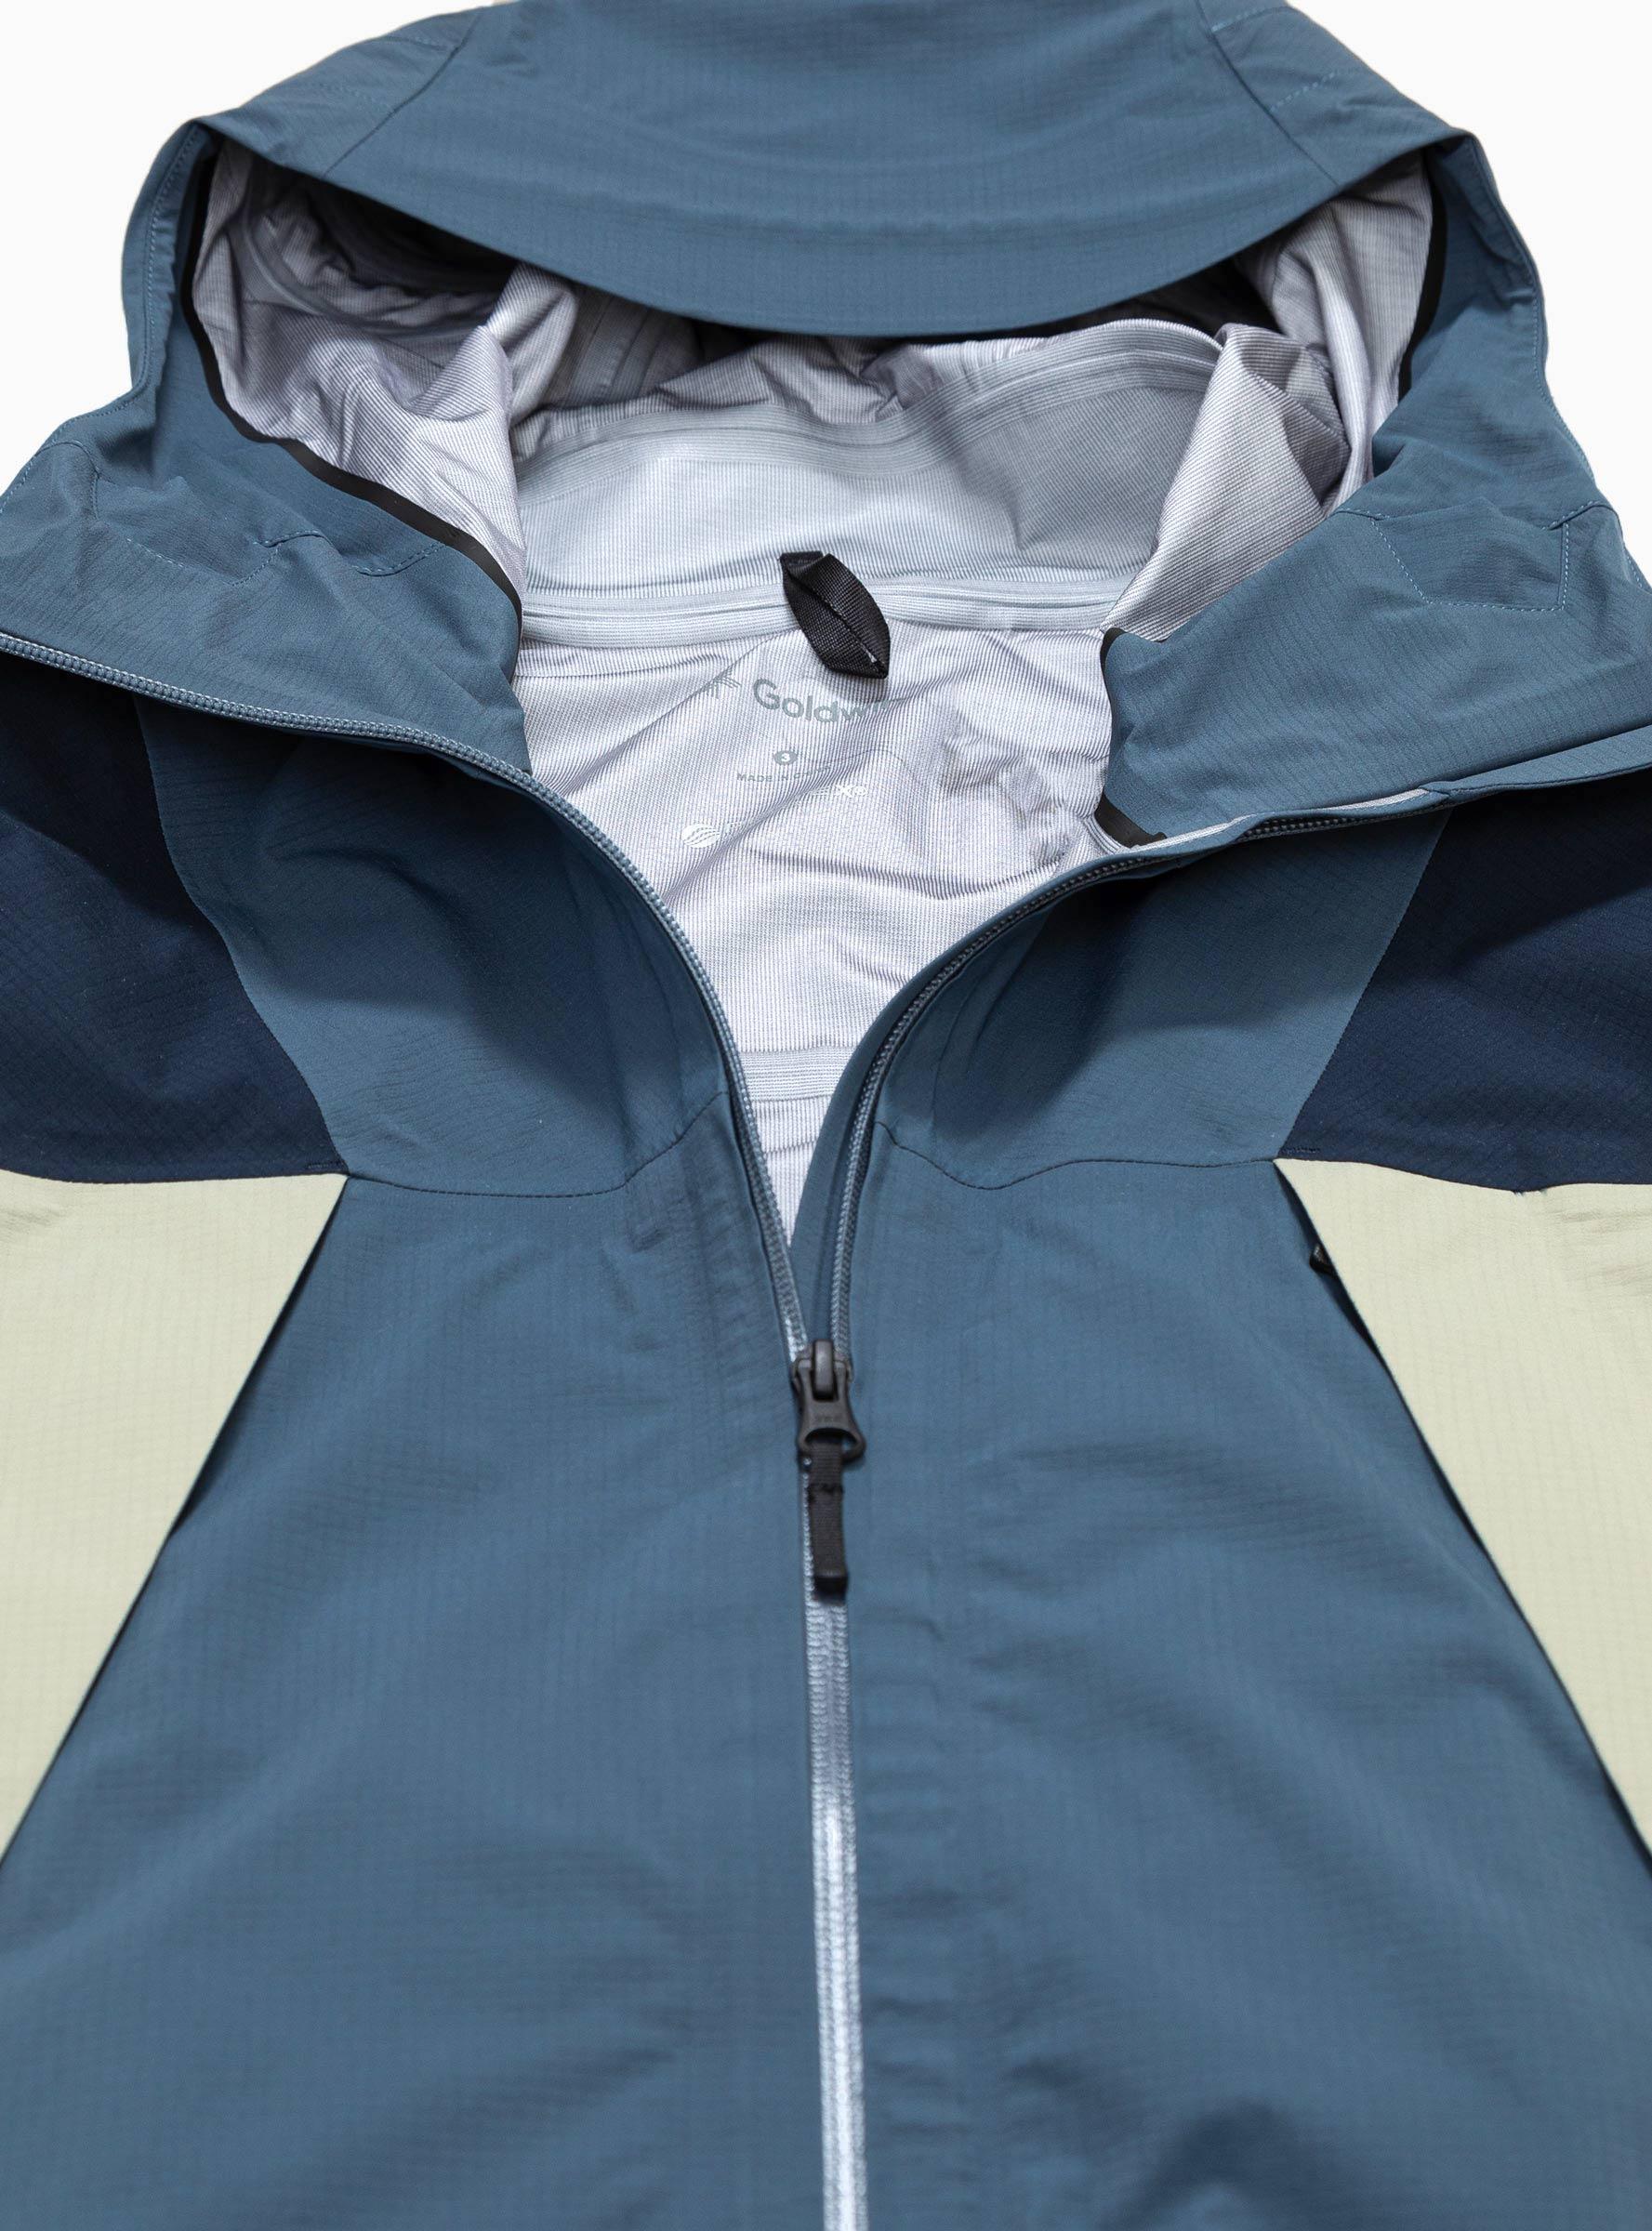 Goldwin Pertex Shieldair All Weather Jacket Blue for Men | Lyst